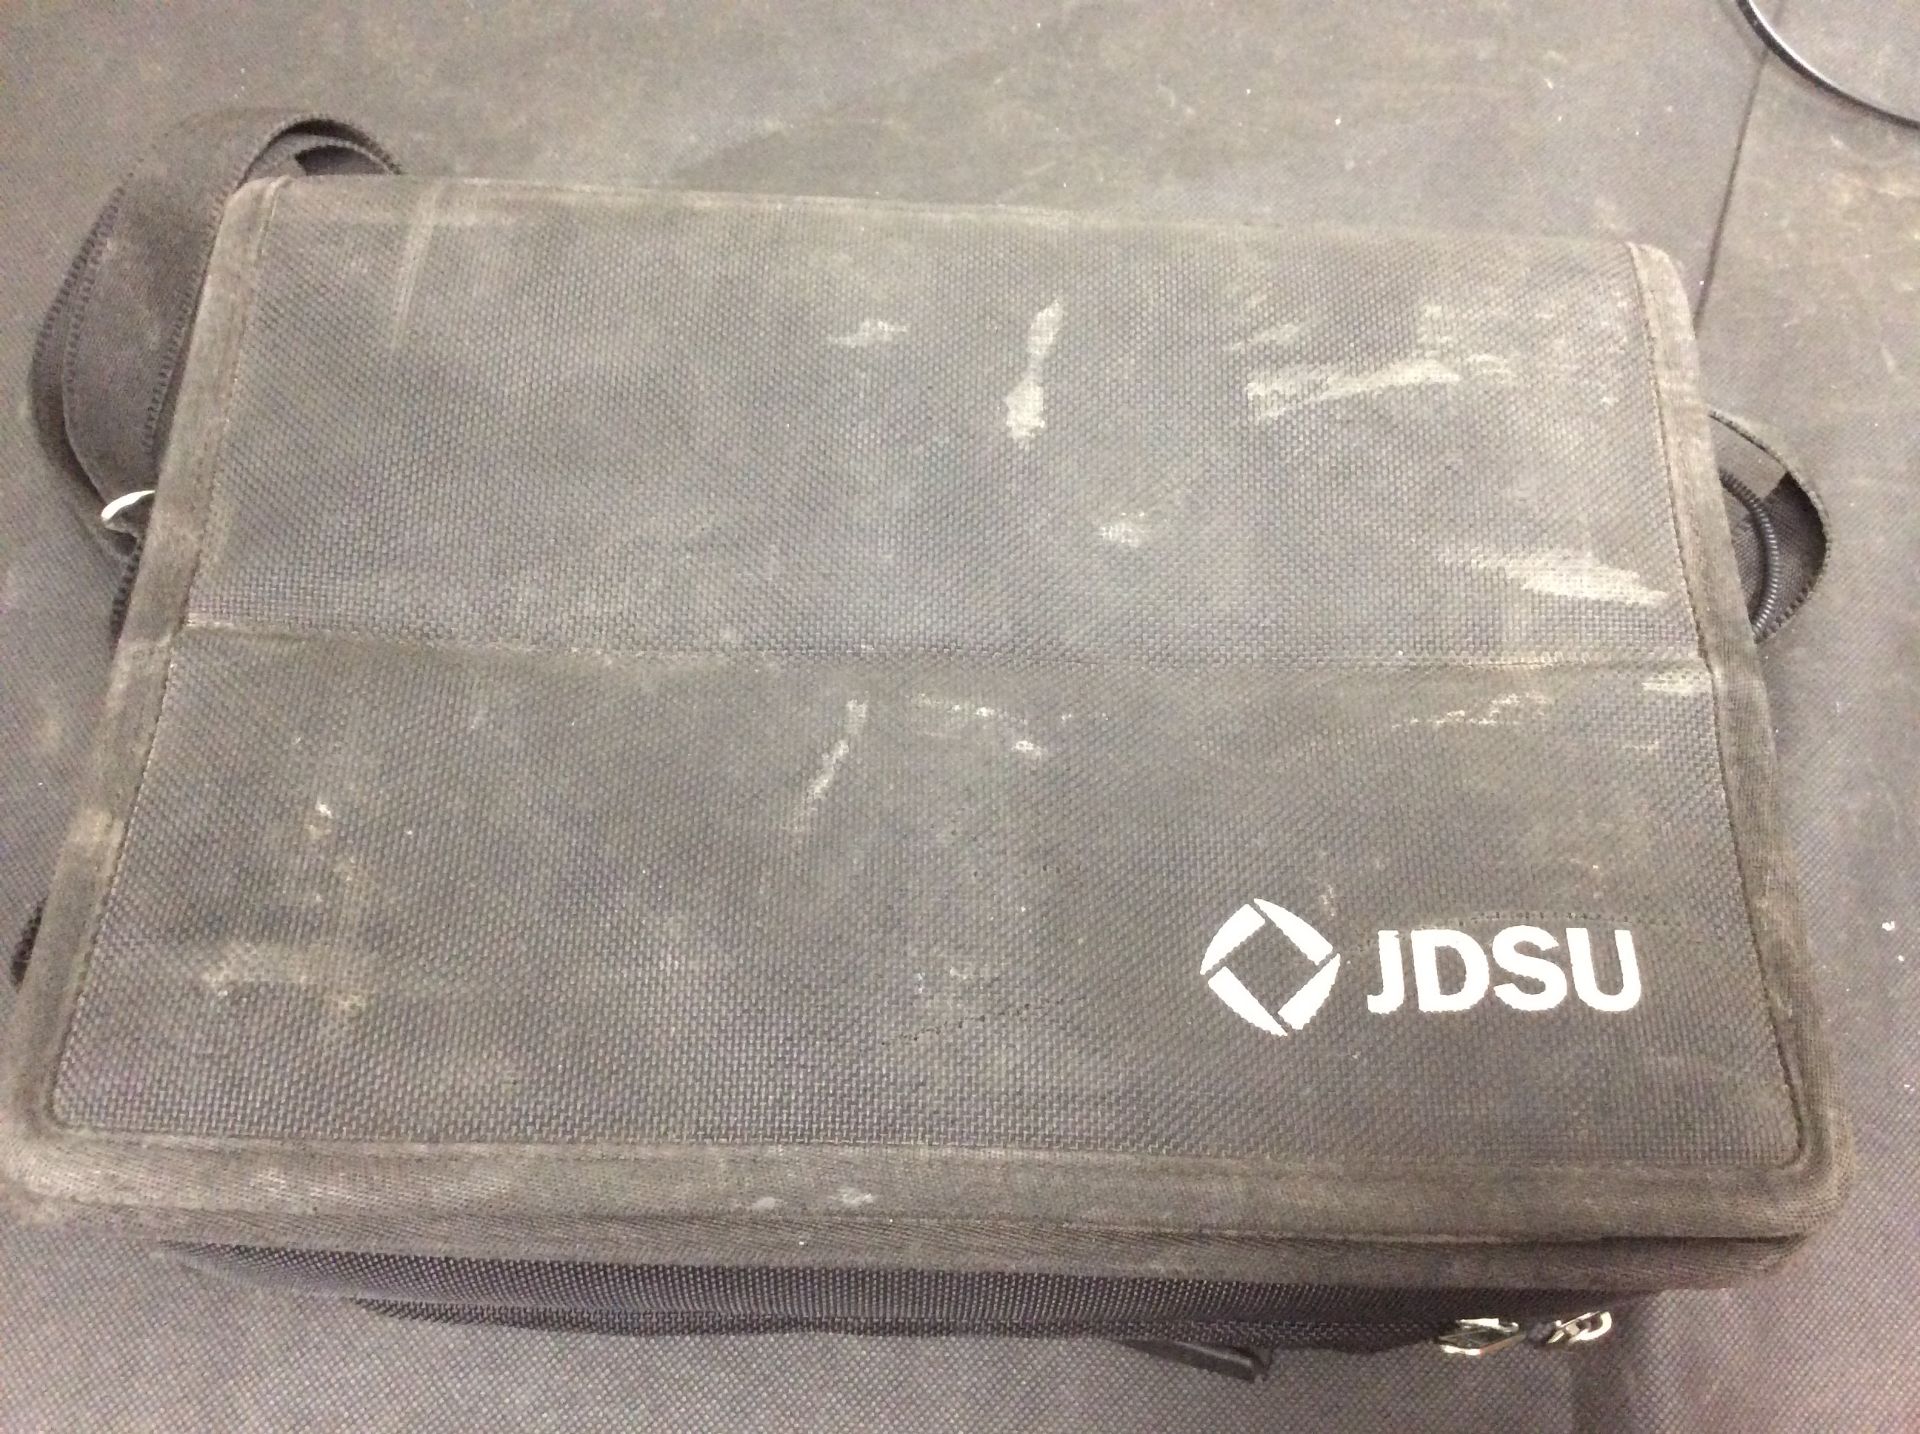 Jdsu jd725a cable and antenna analyzer - Image 2 of 2